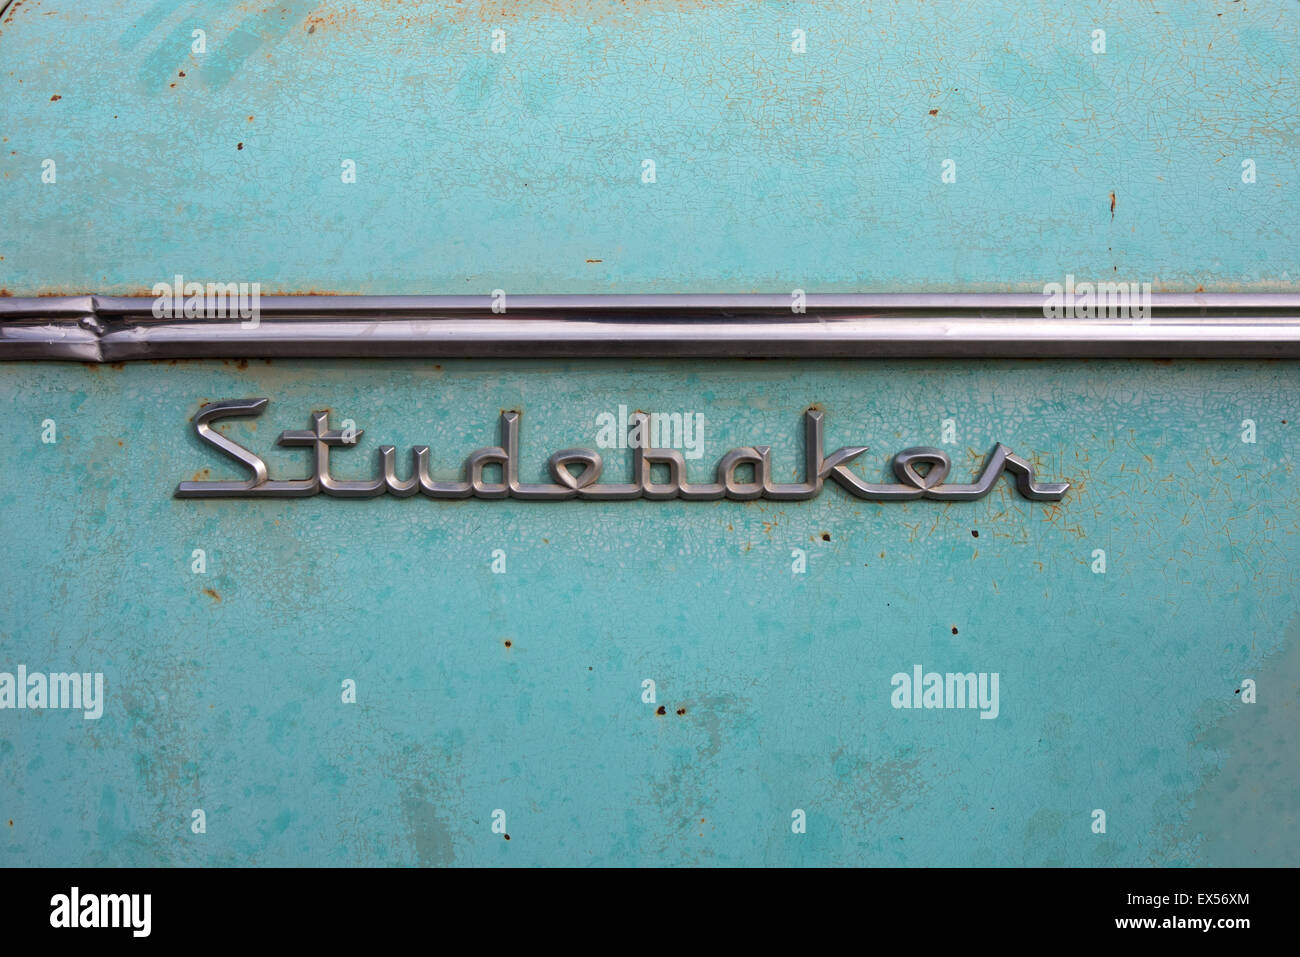 Studebaker logo Stock Photo